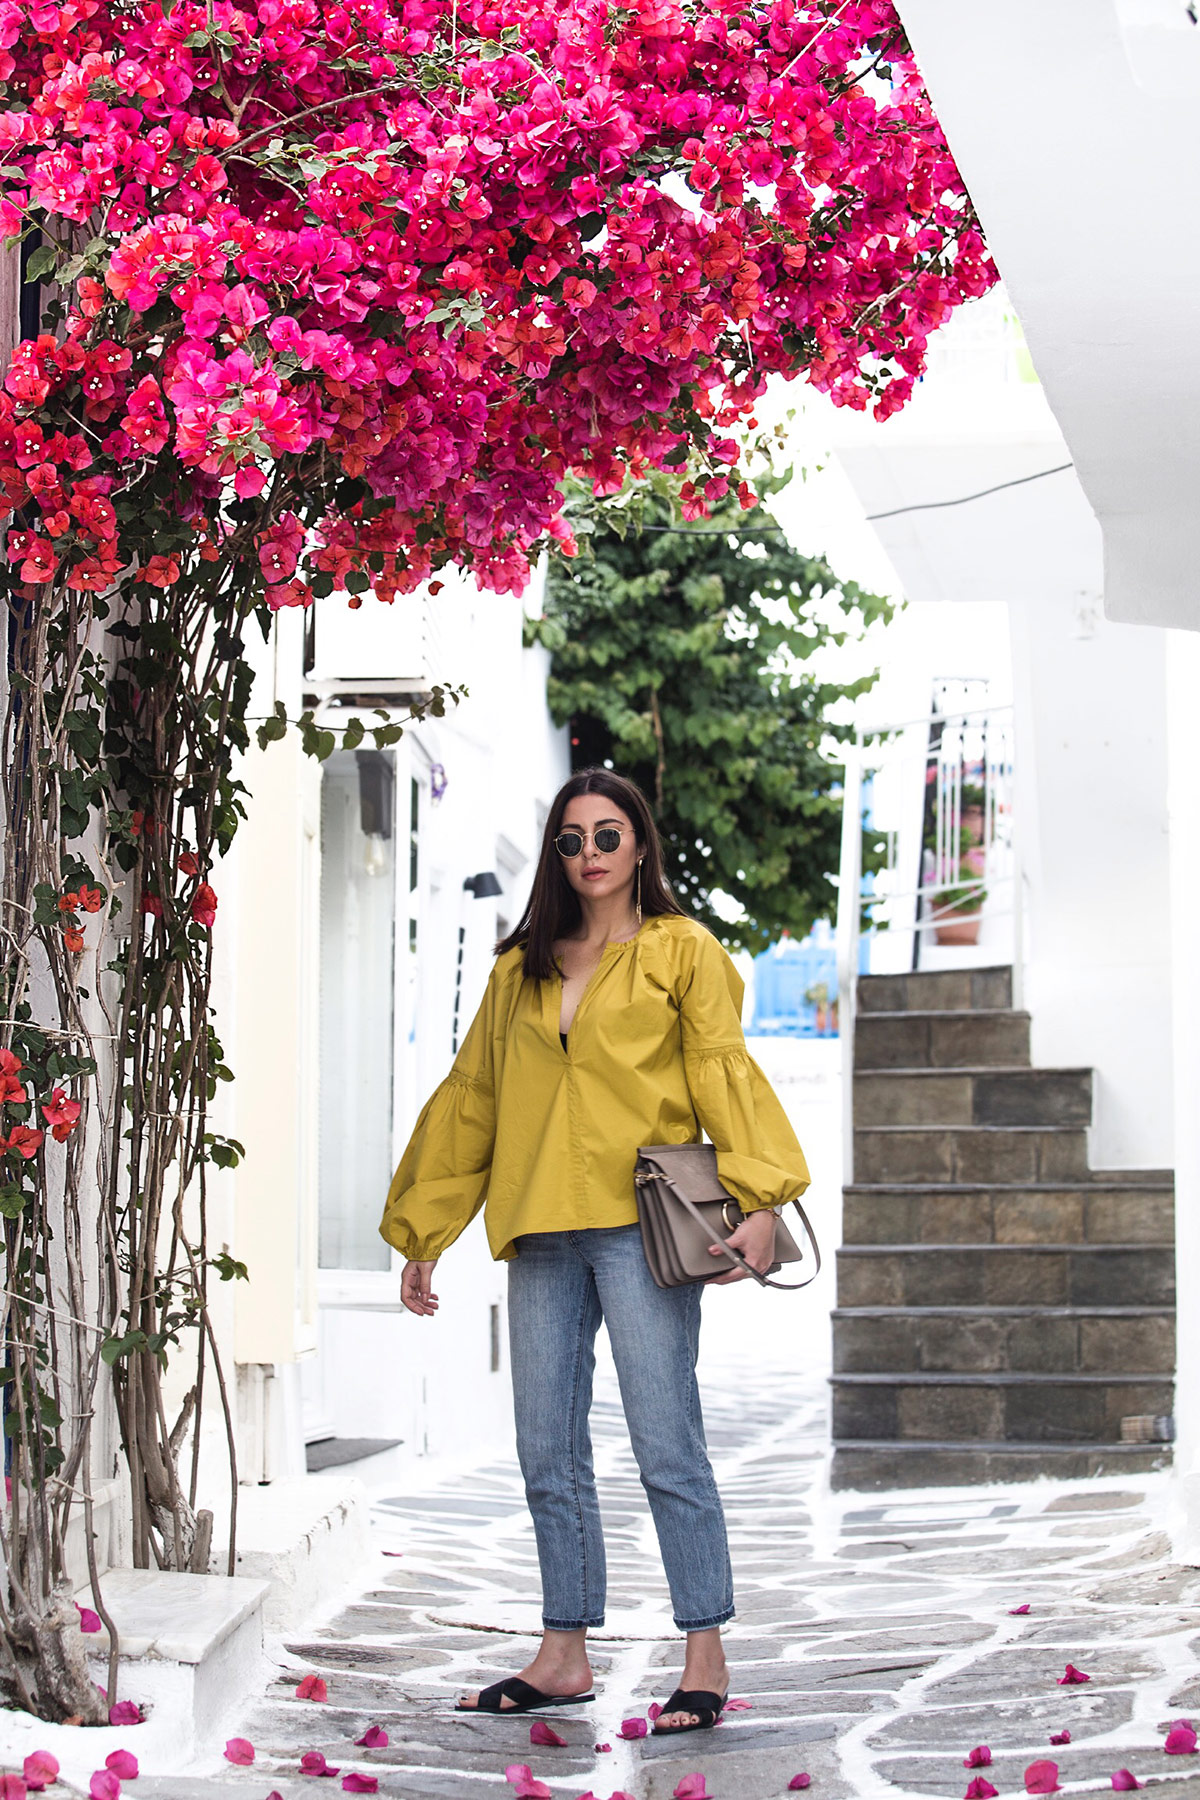 Greek islands fashion - What to wear in Greece by Stella Asteria - Fashion & Lifestyle Blogger